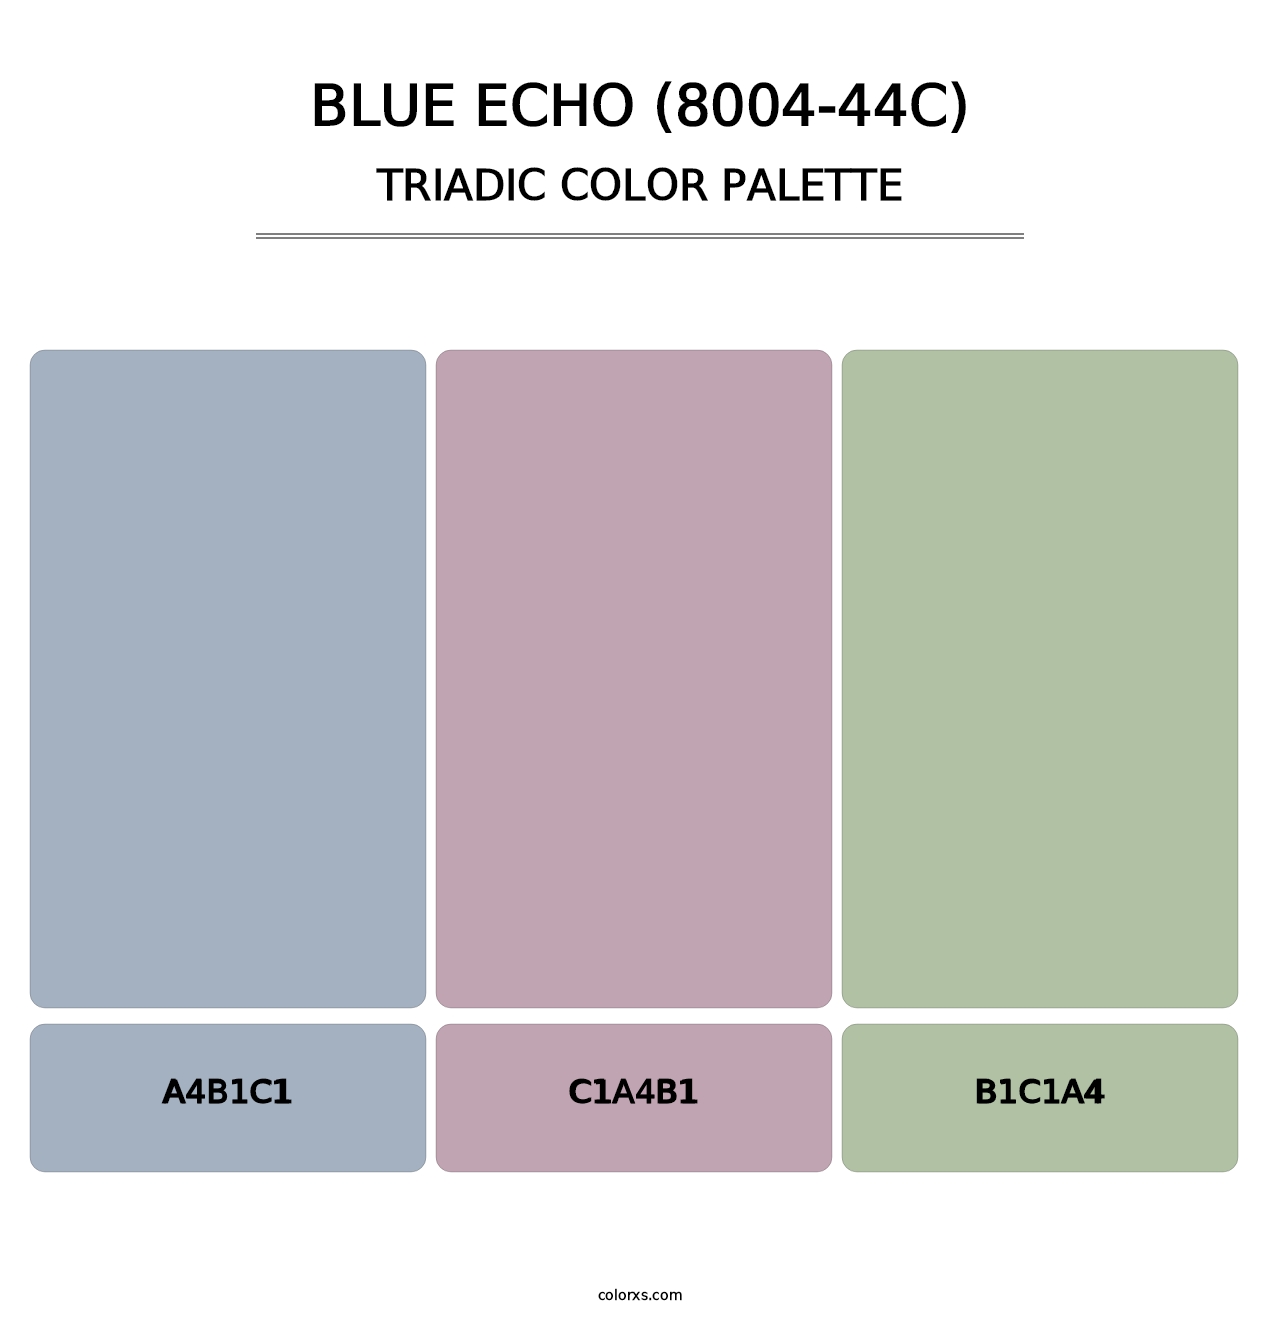 Blue Echo (8004-44C) - Triadic Color Palette